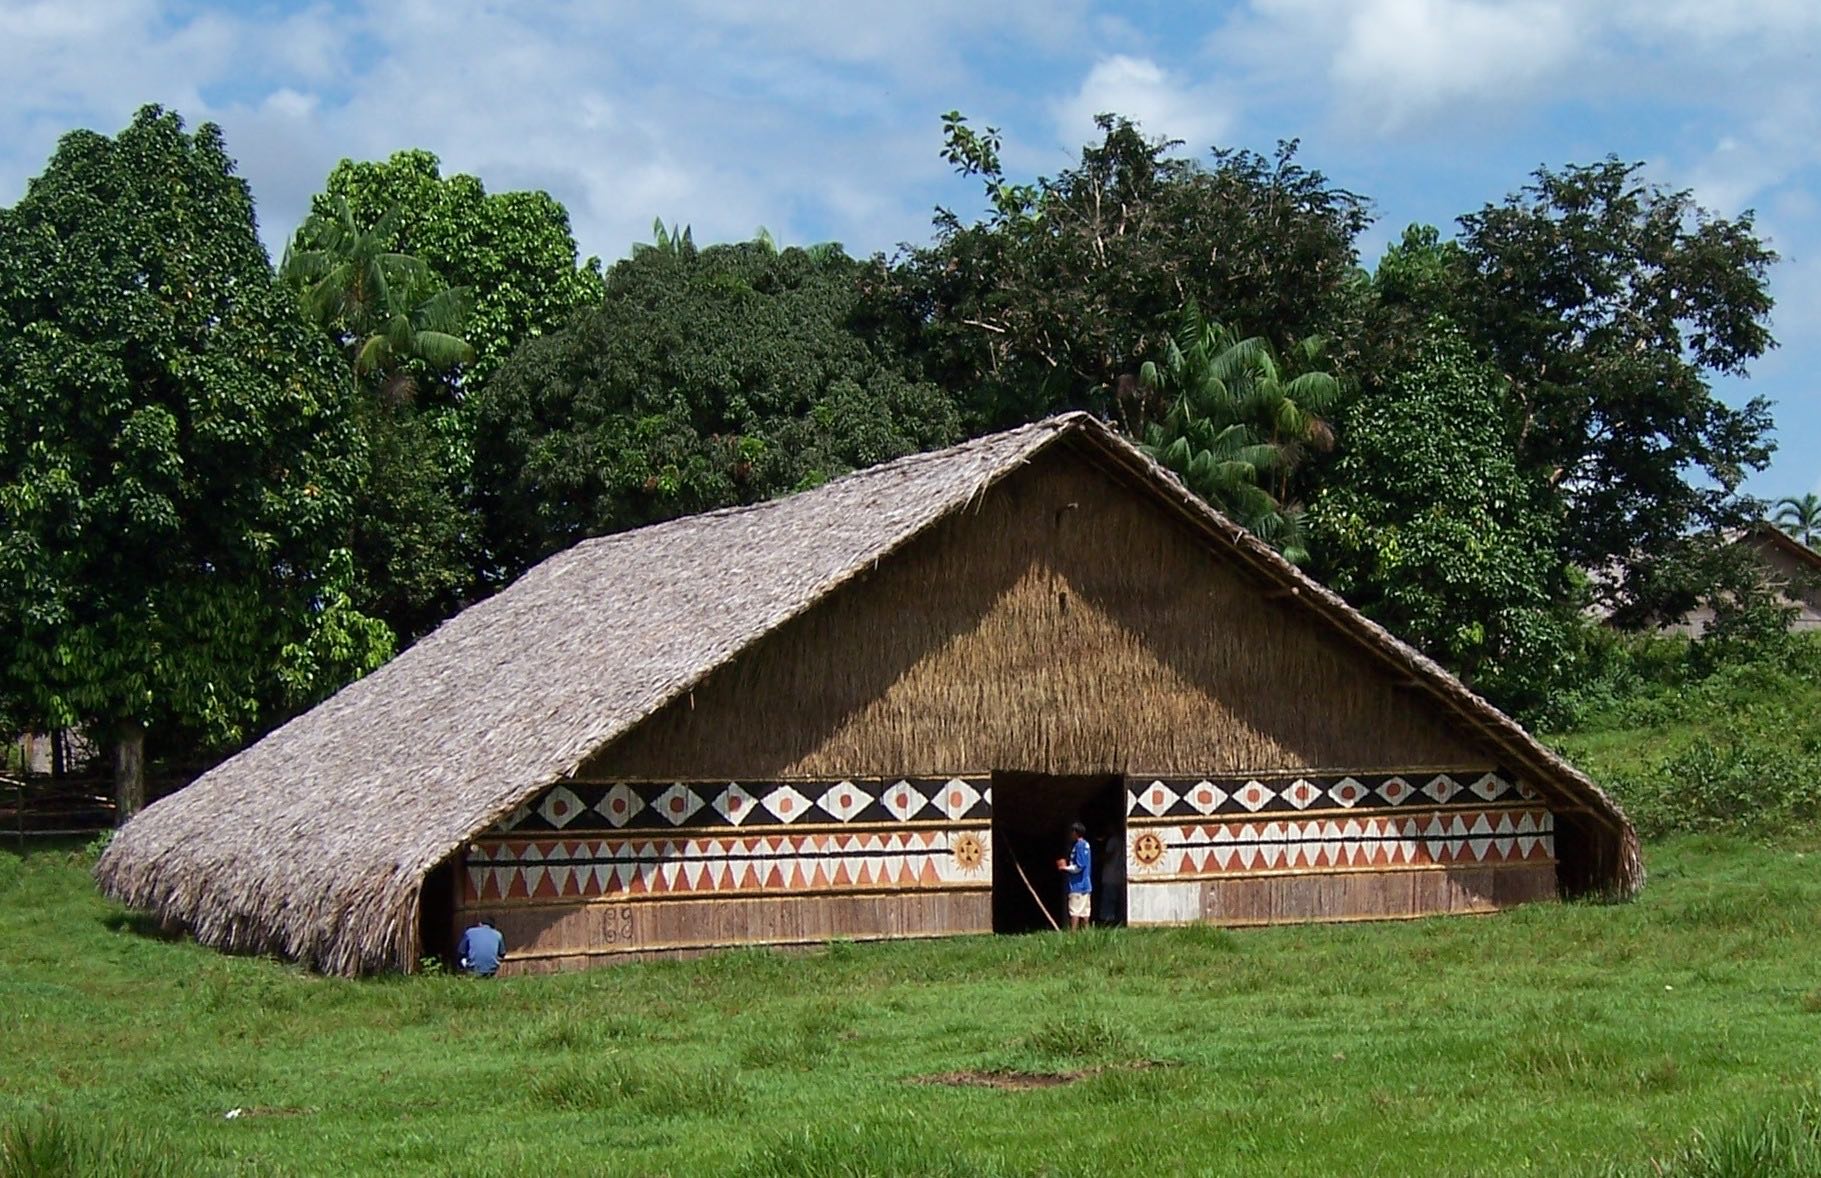 Kotiria longhouse in 2009